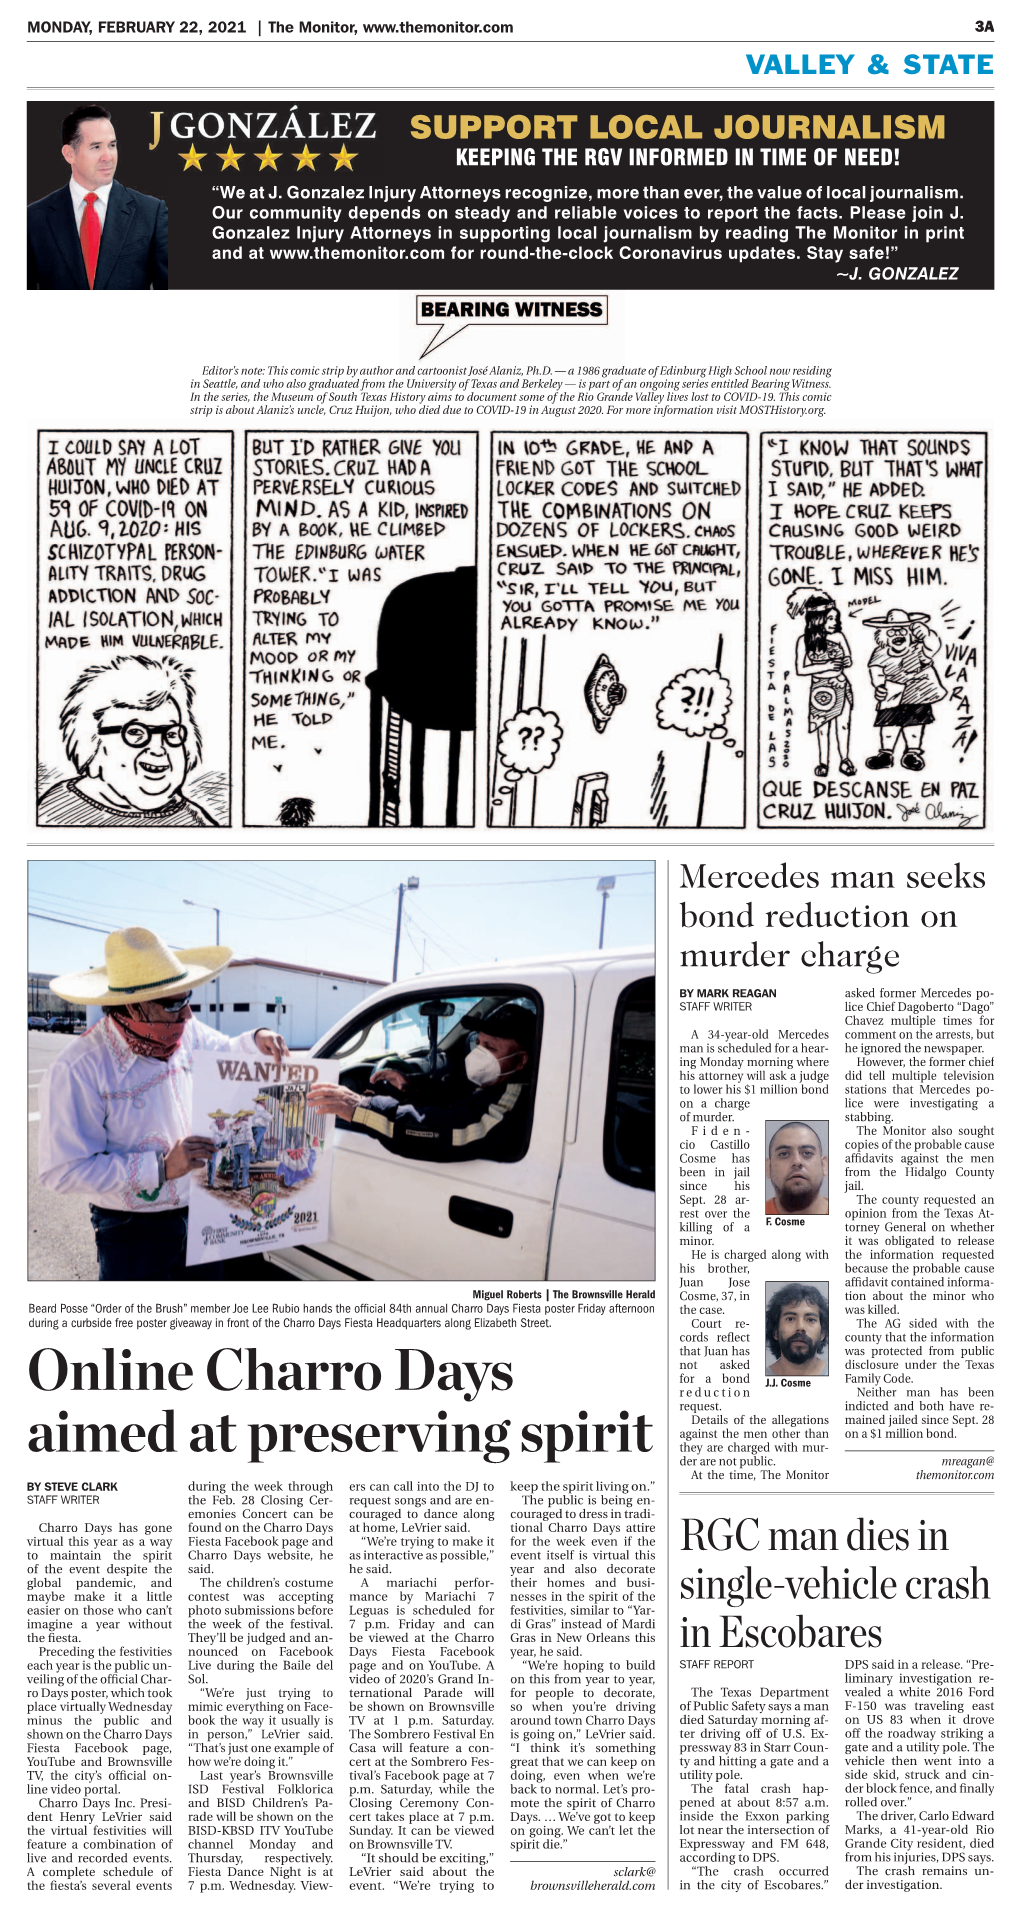 Online Charro Days Aimed at Preserving Spirit